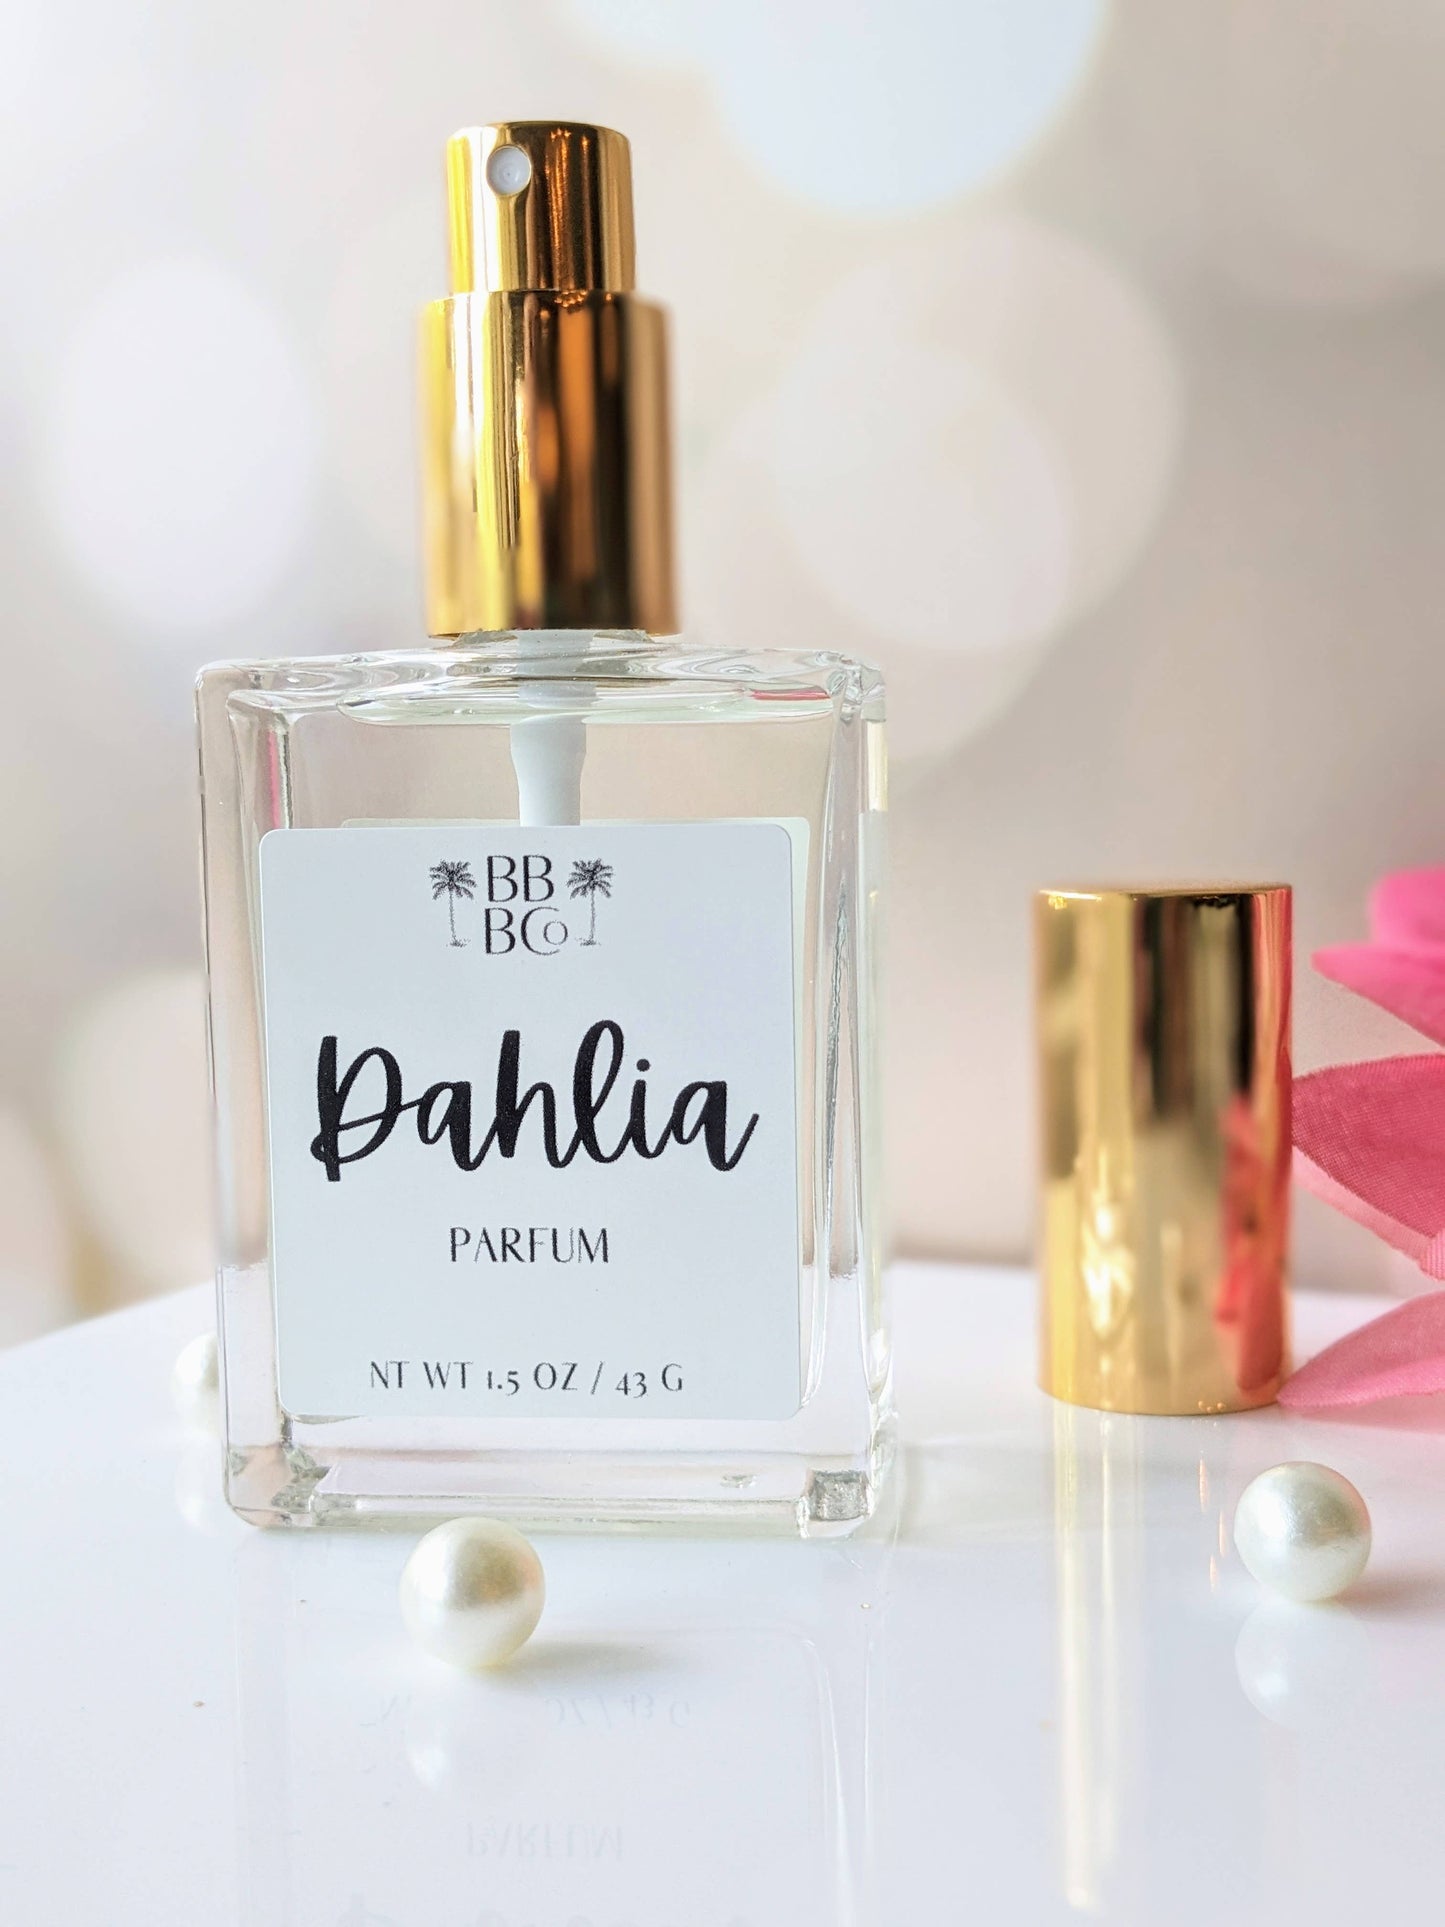 Dahlia Perfume